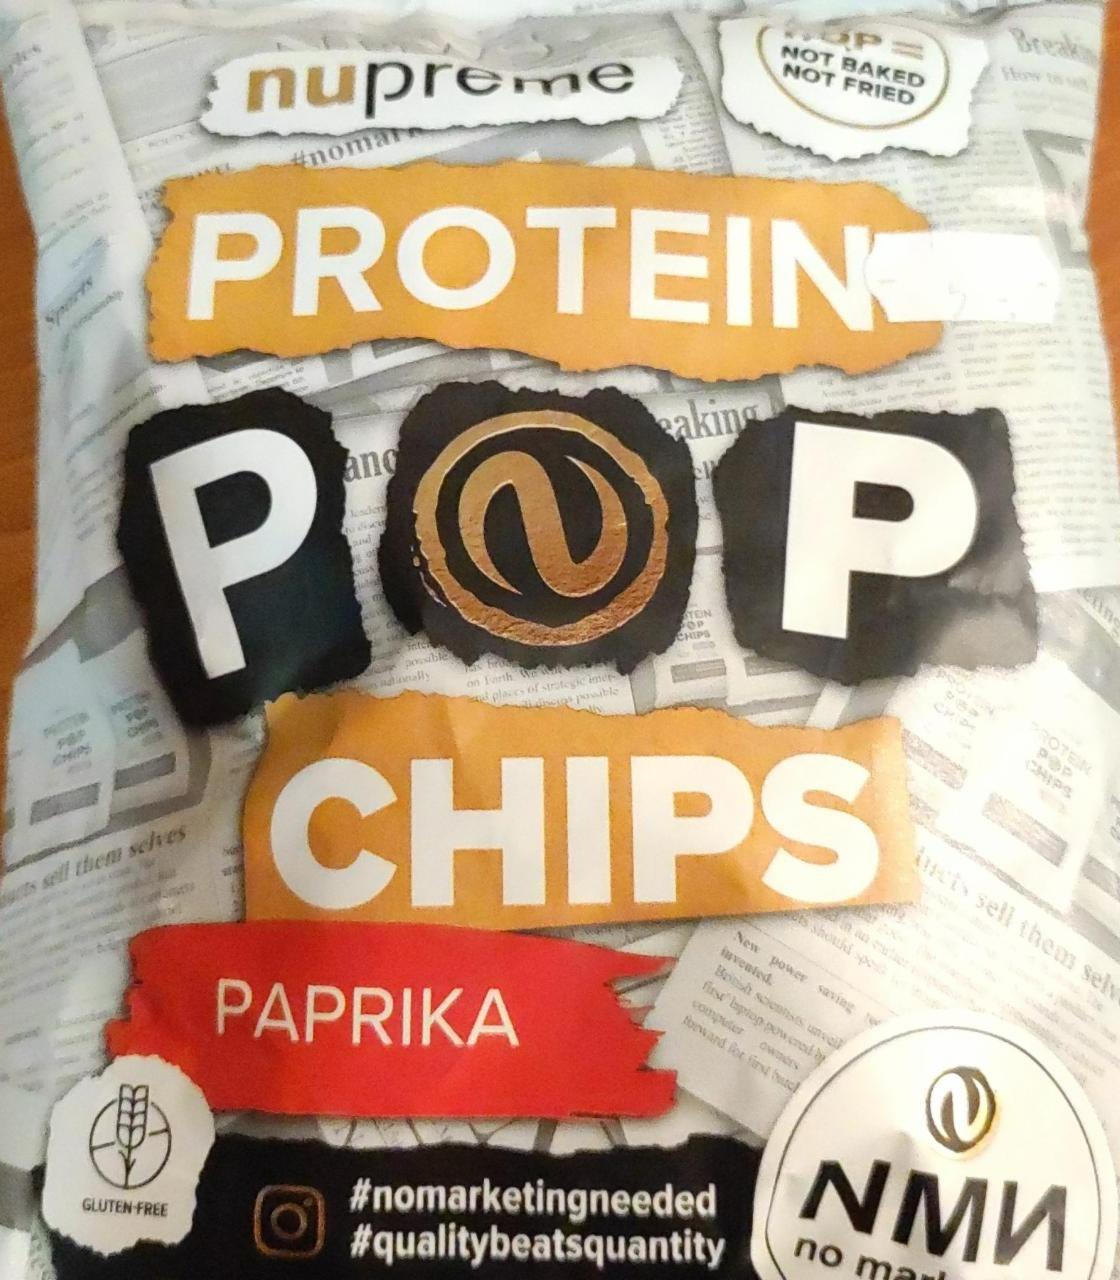 Fotografie - Protein pop chips paprika Nupreme